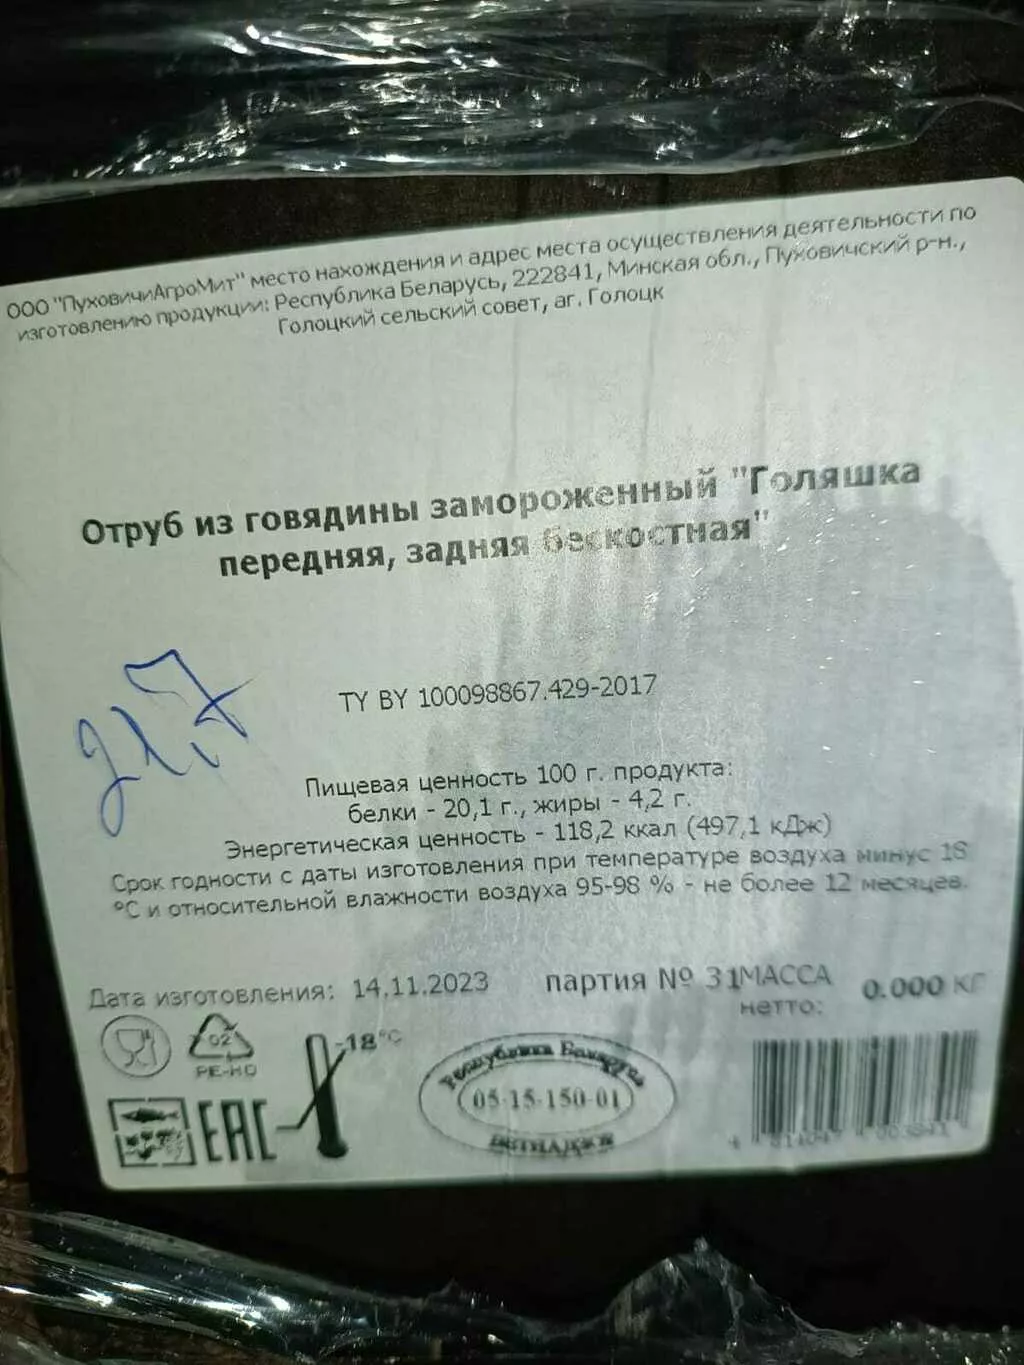 говядина РБ голяшка инд.коробка-430 руб. в Санкт-Петербурге 2